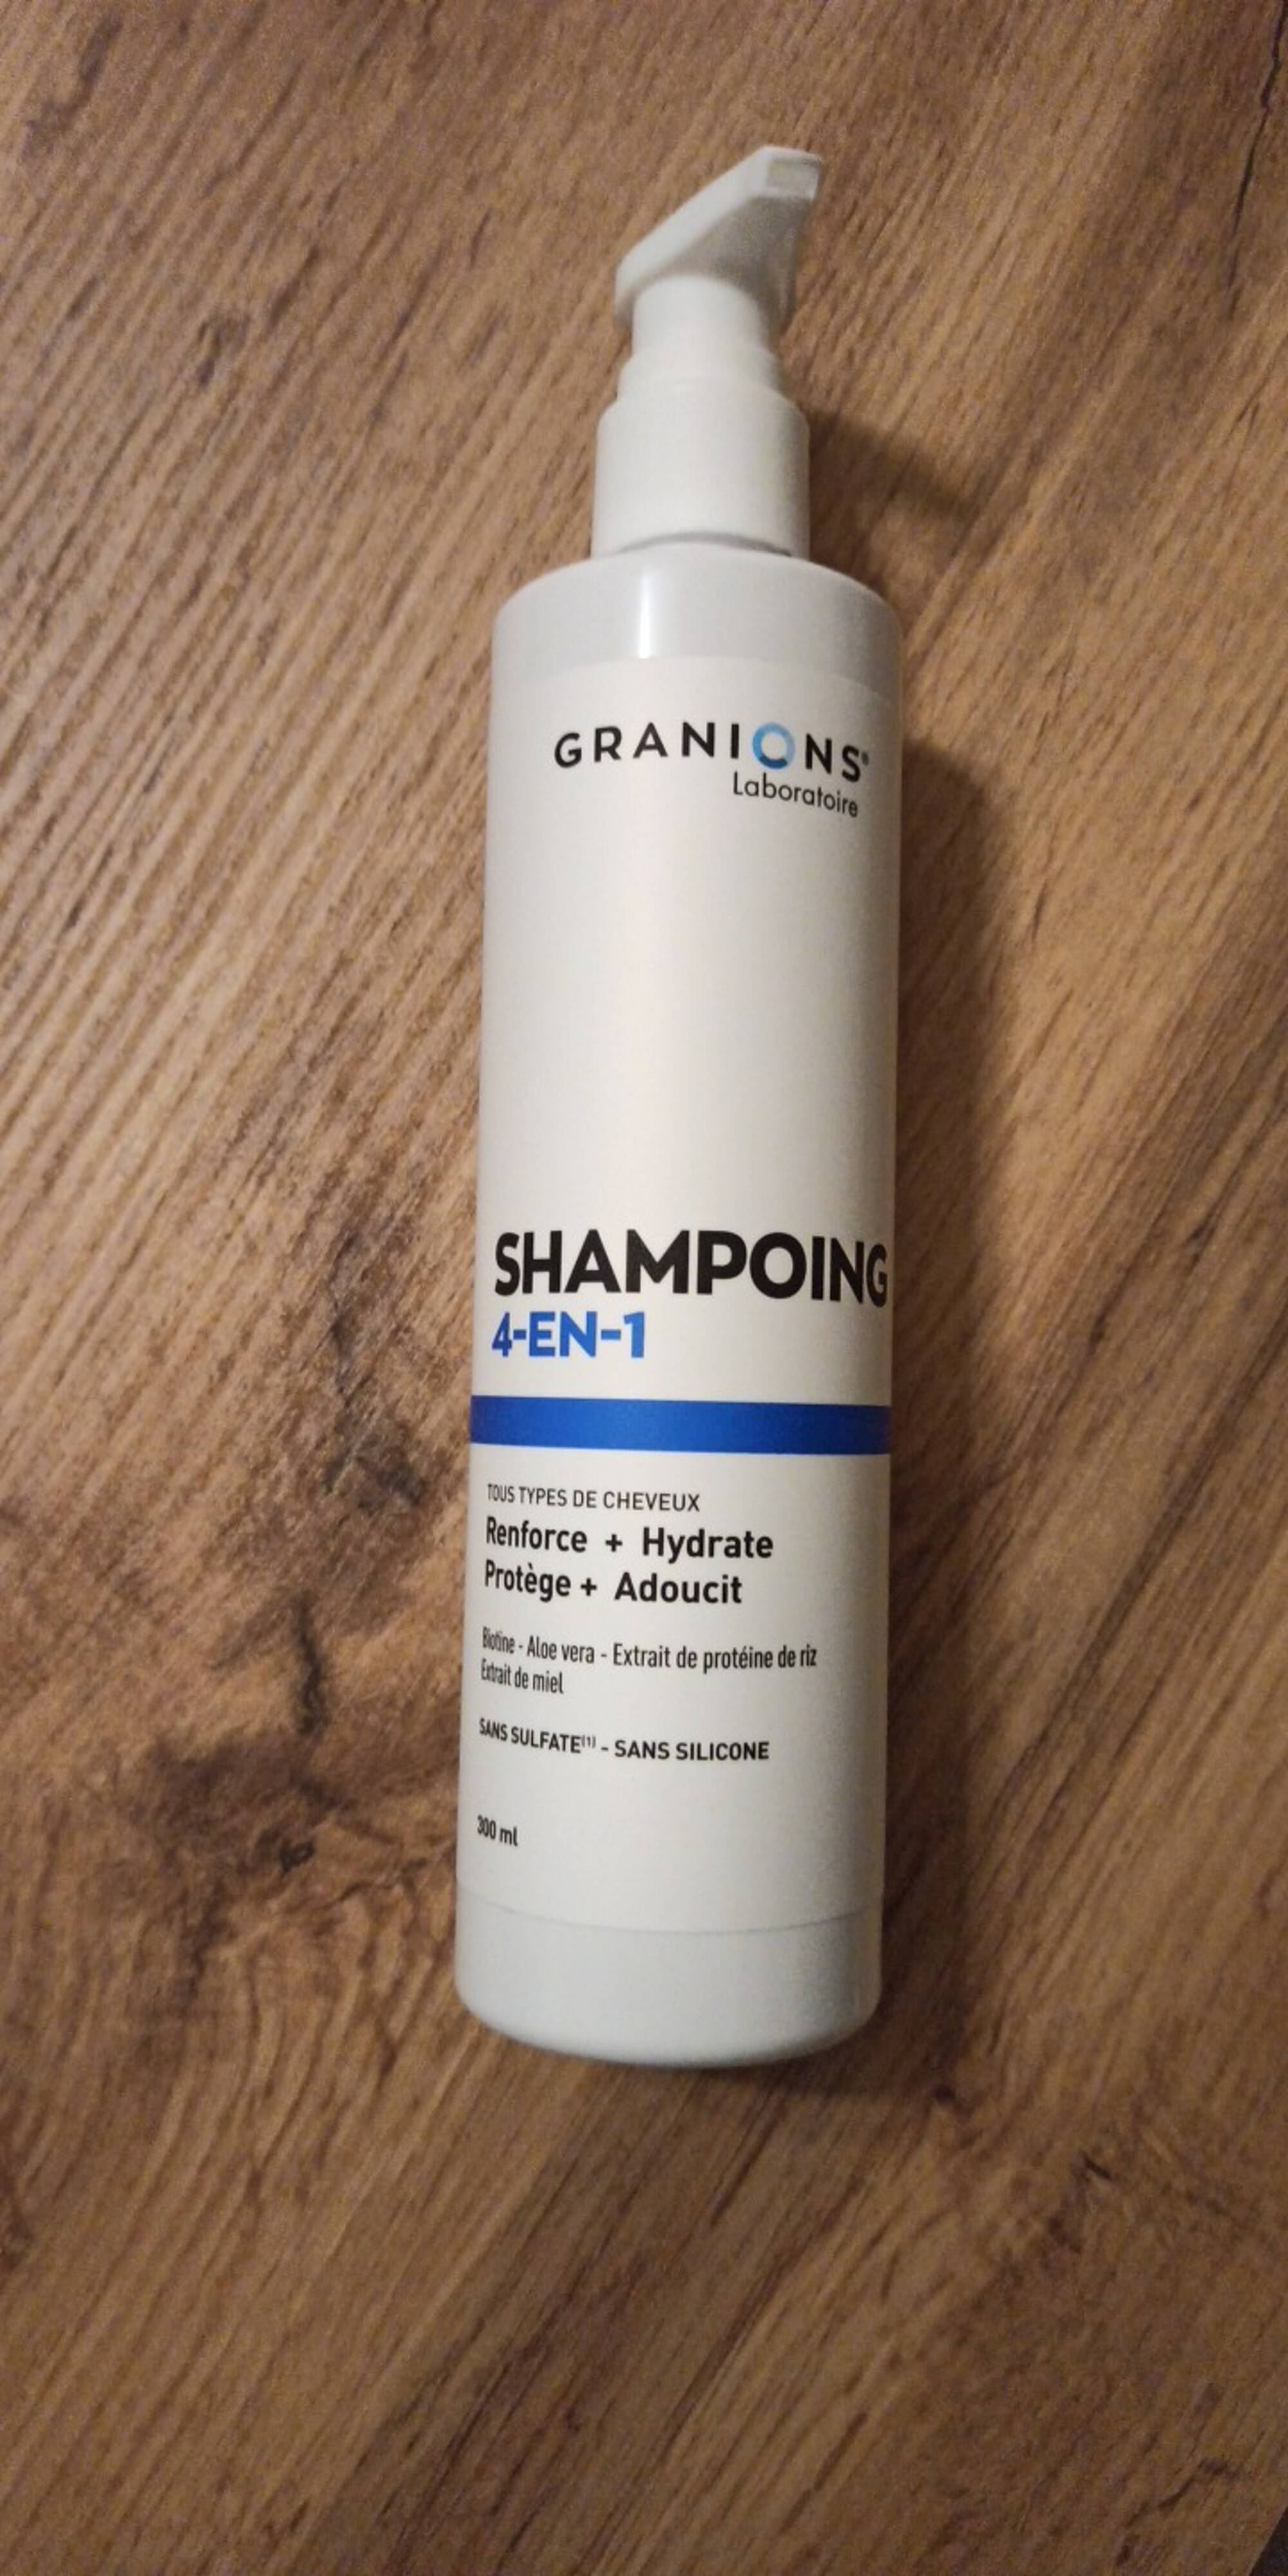 GRANIONS - Shampoing 4-en-1